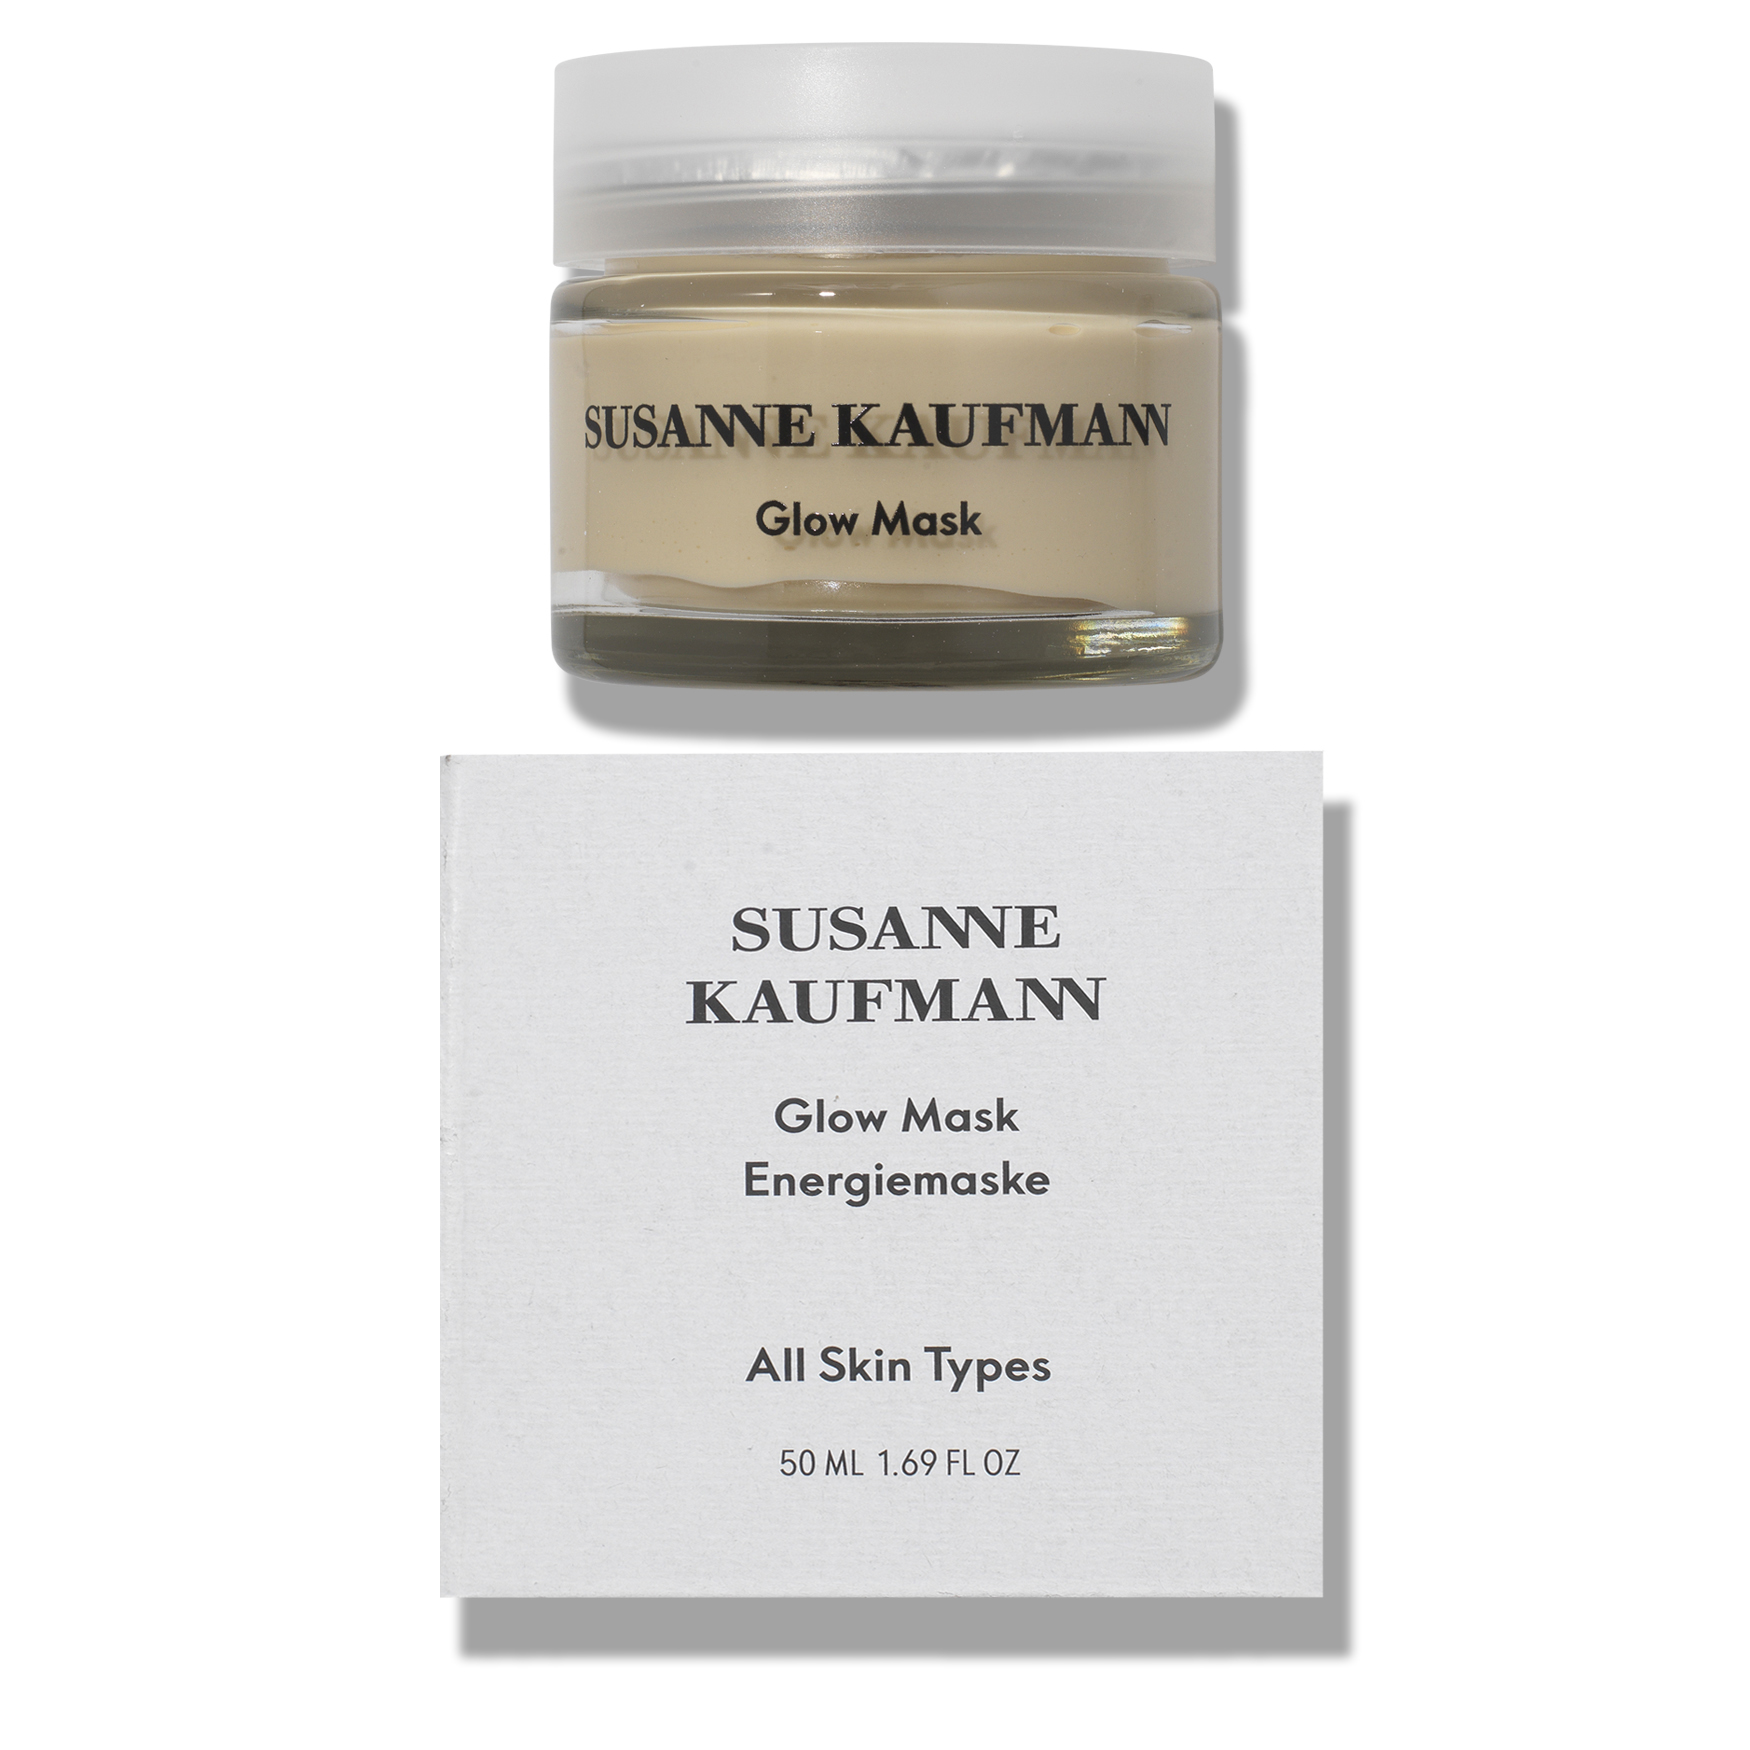 Susanne Kaufmann Glow Mask | Space NK